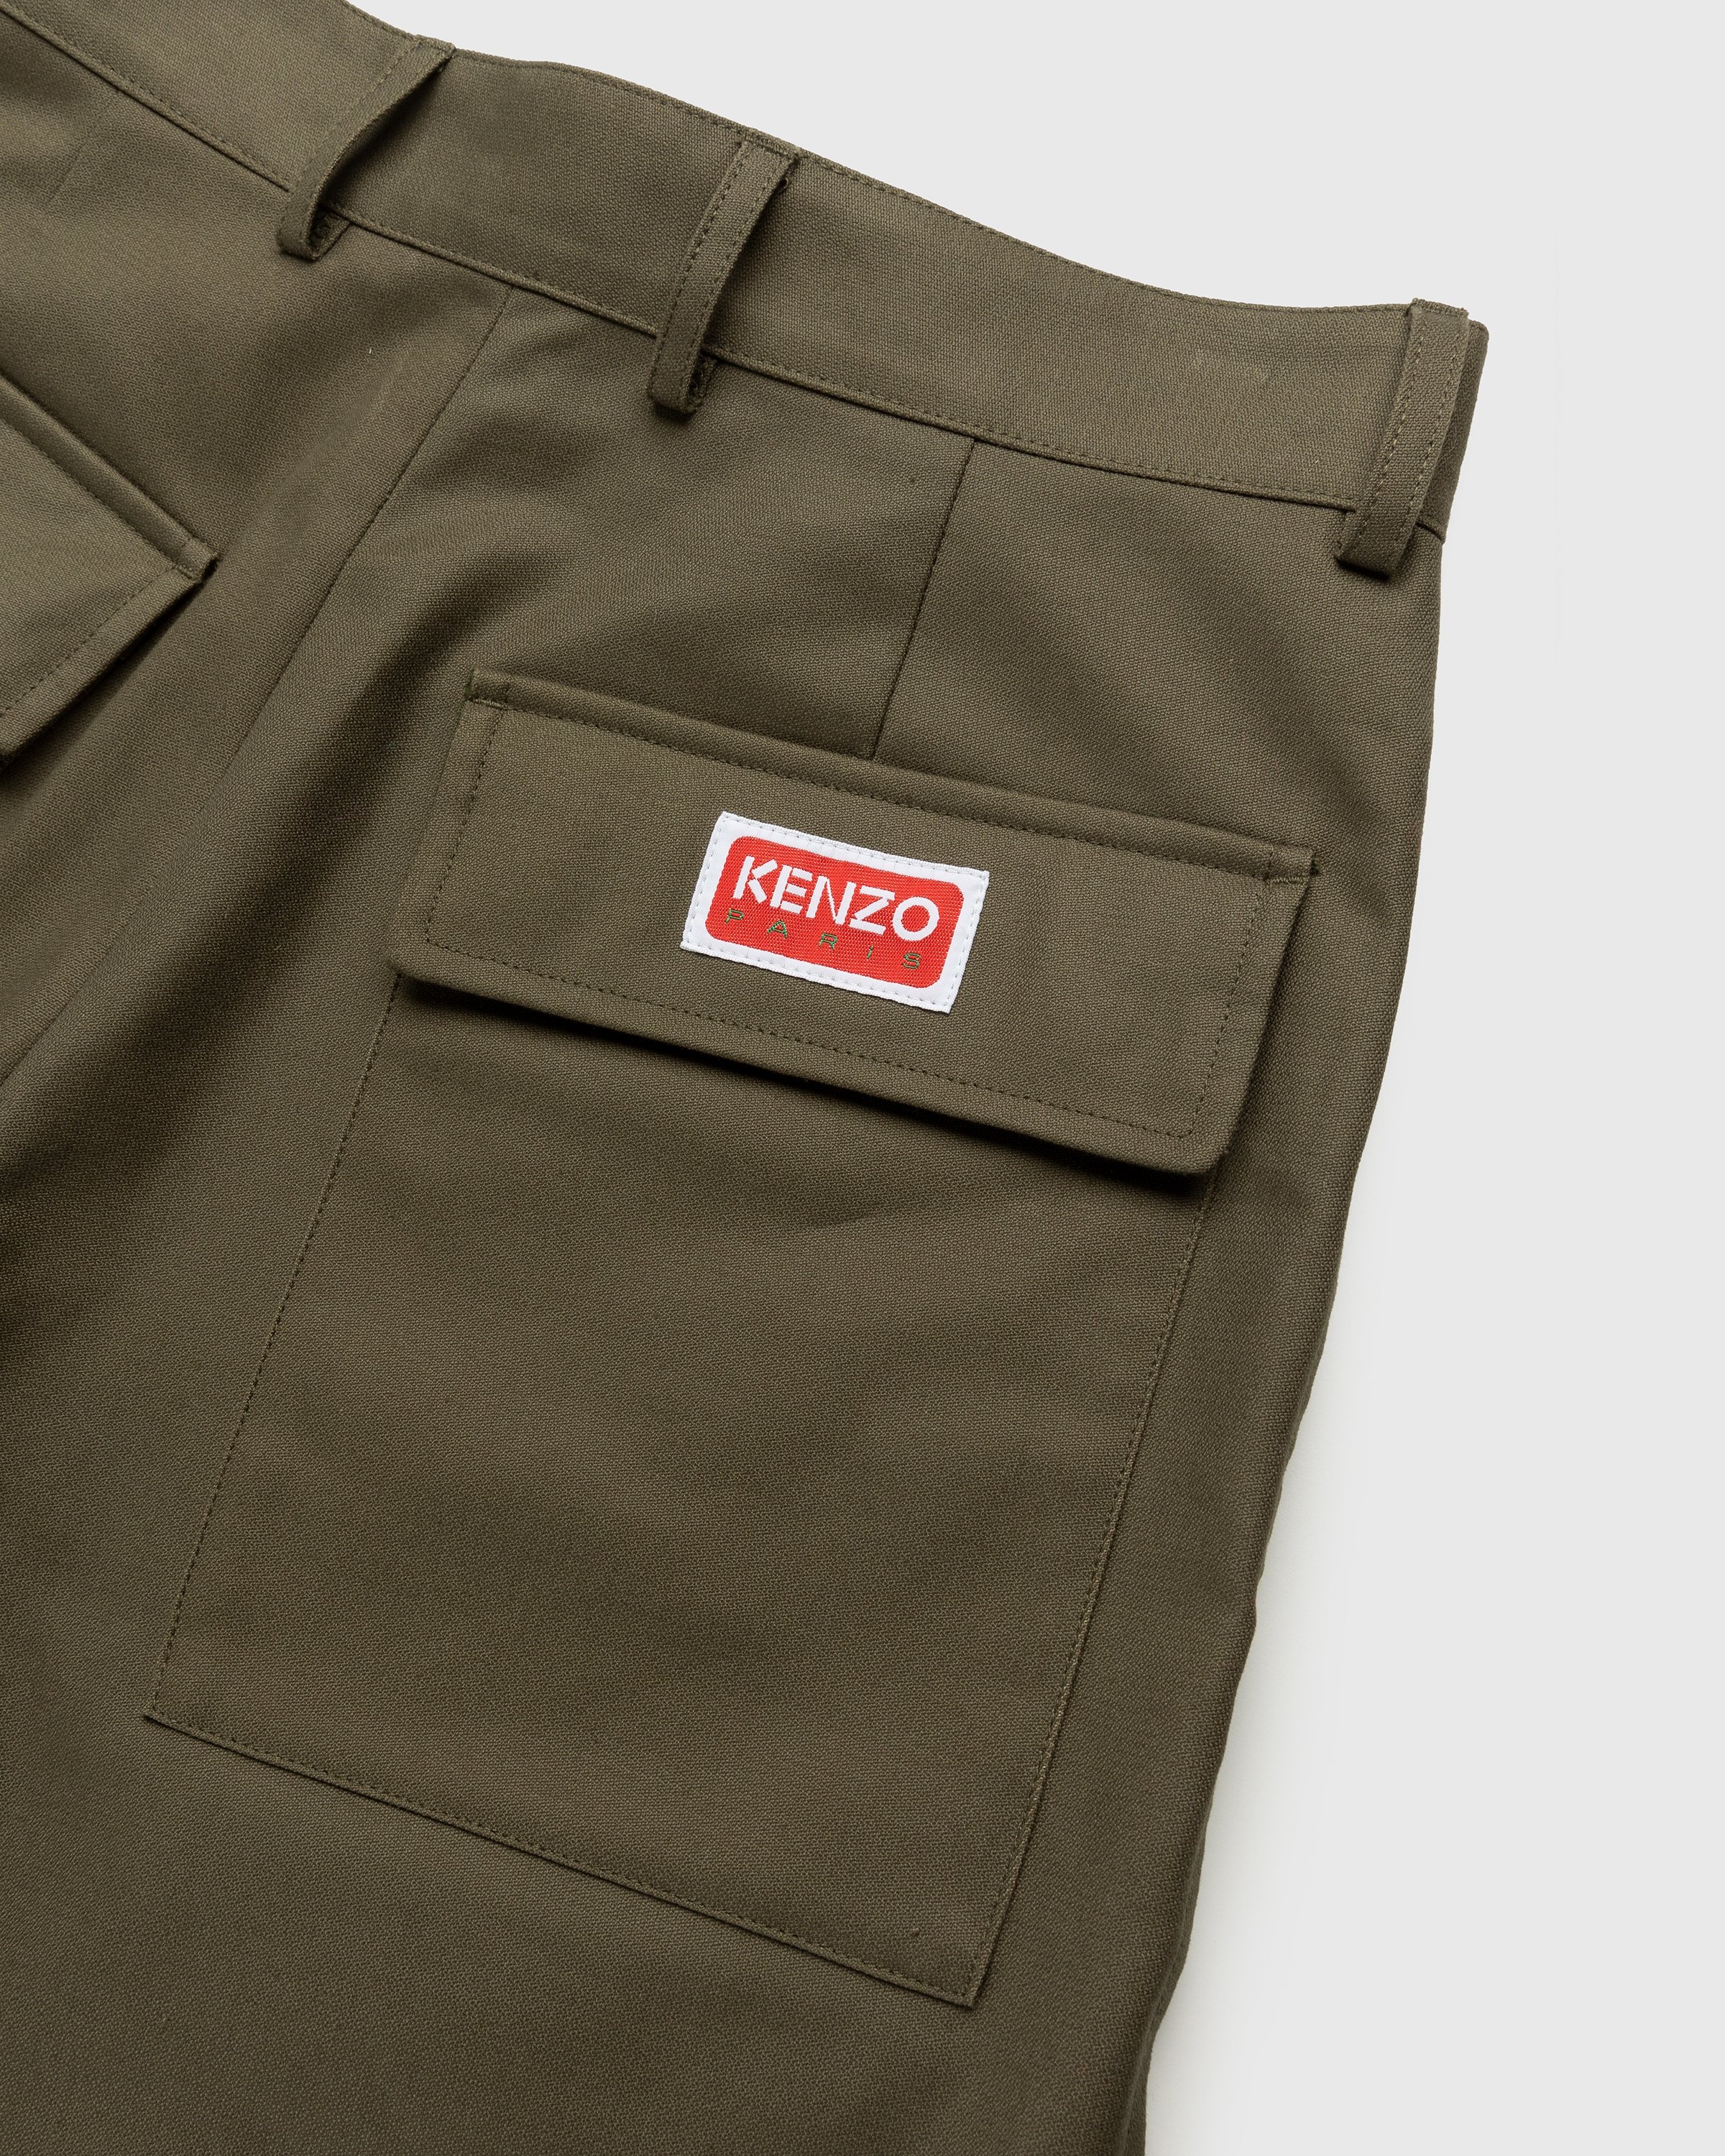 Kenzo – Tailored Pants Dark Khaki - Pants - Green - Image 5